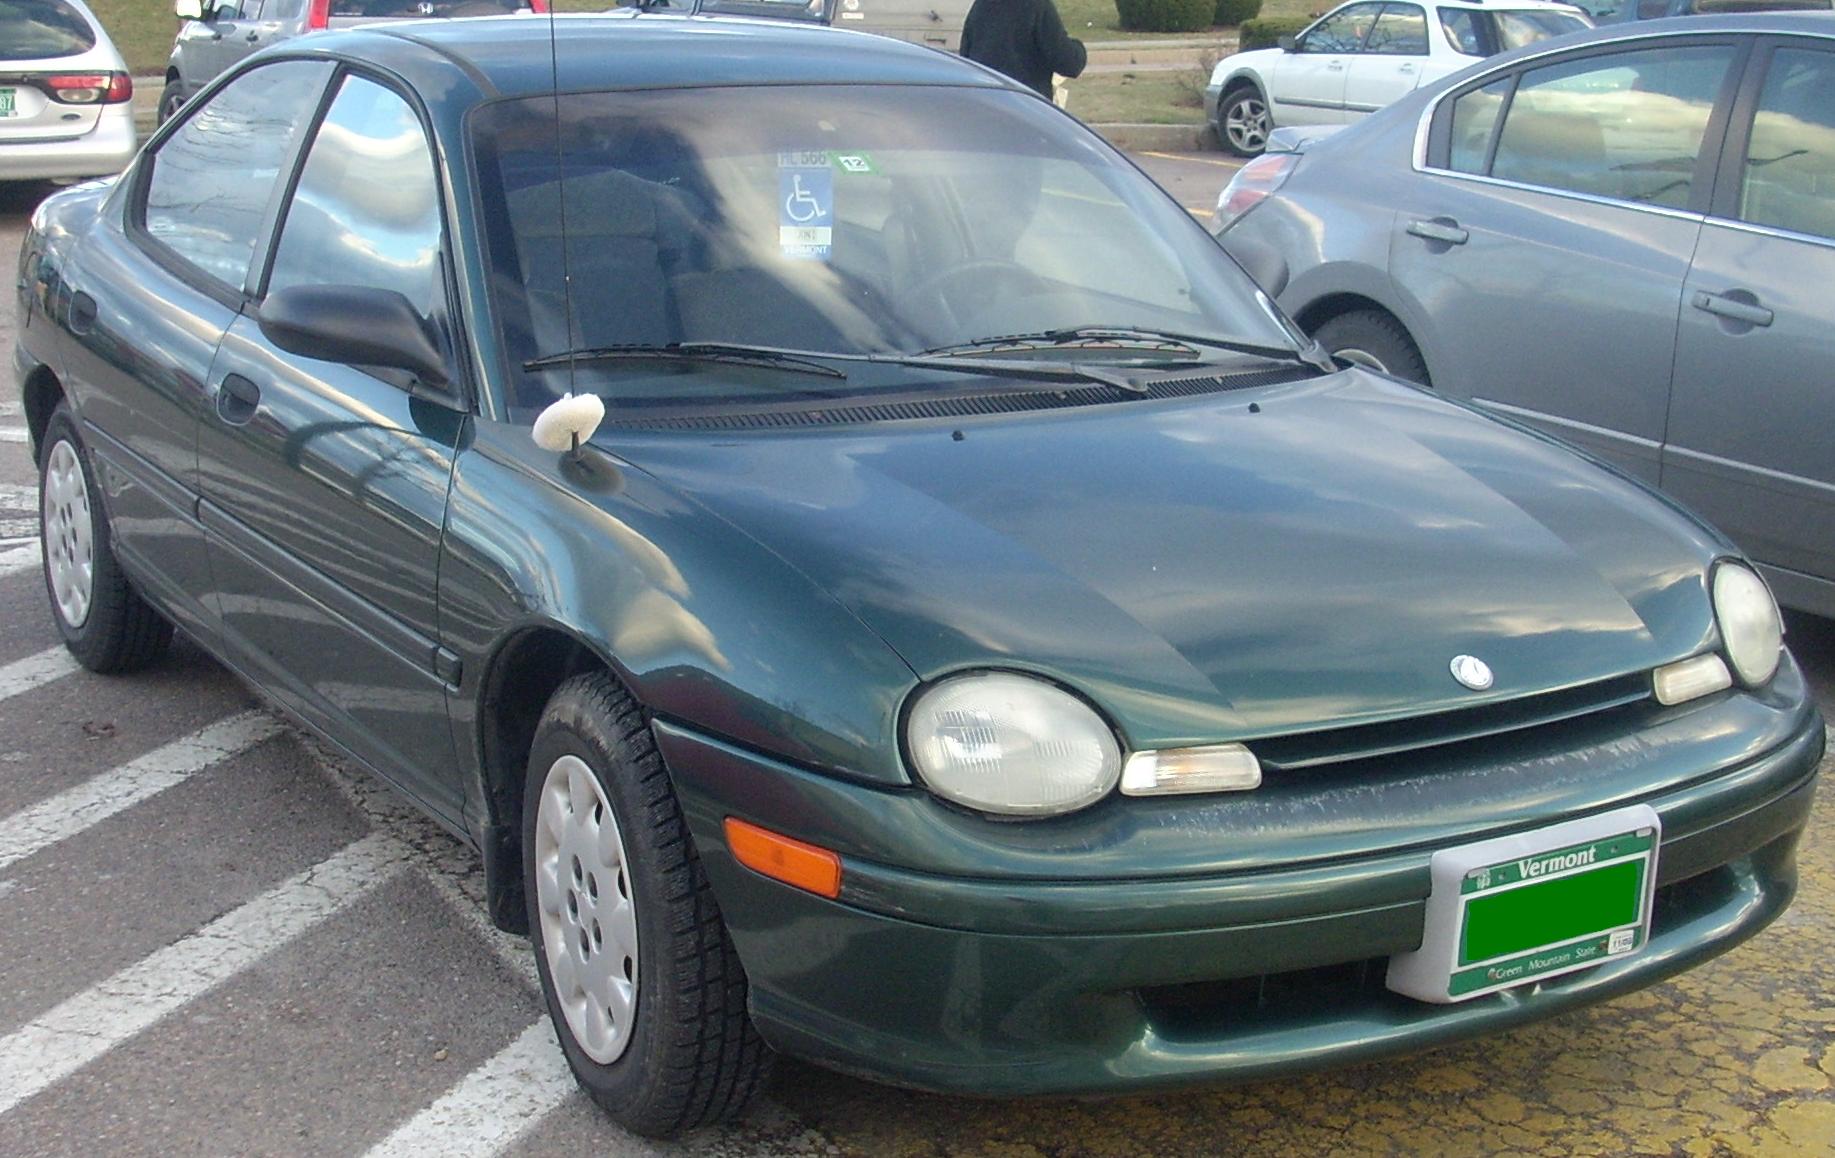 File:1997-99 Plymouth Neon Sedan.jpg - Wikimedia Commons